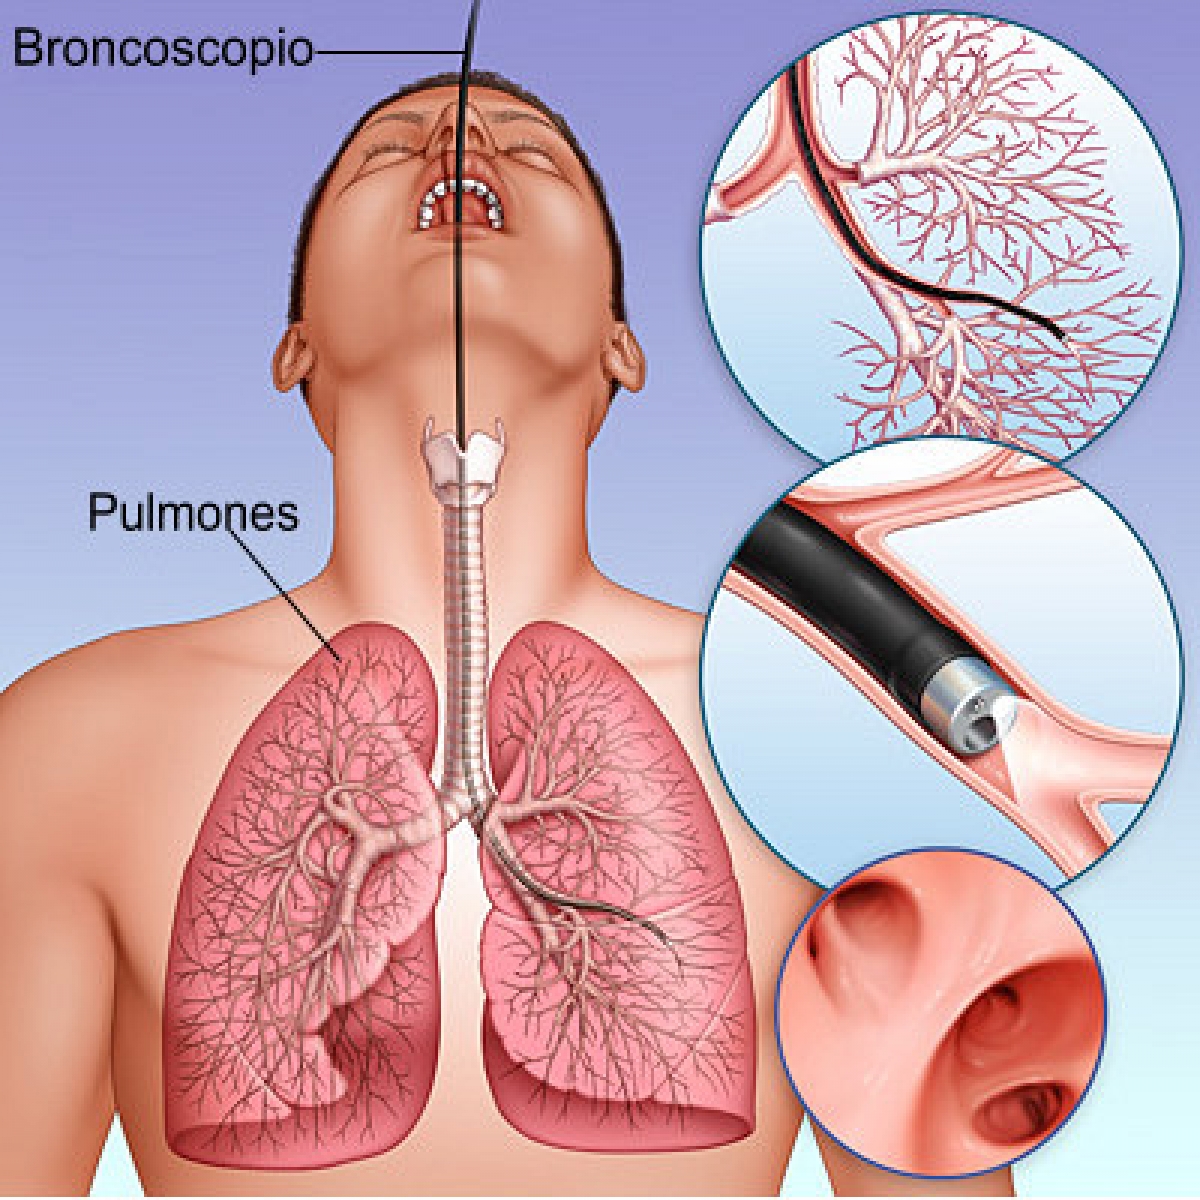 Biopsia pulmonar quirúrgica